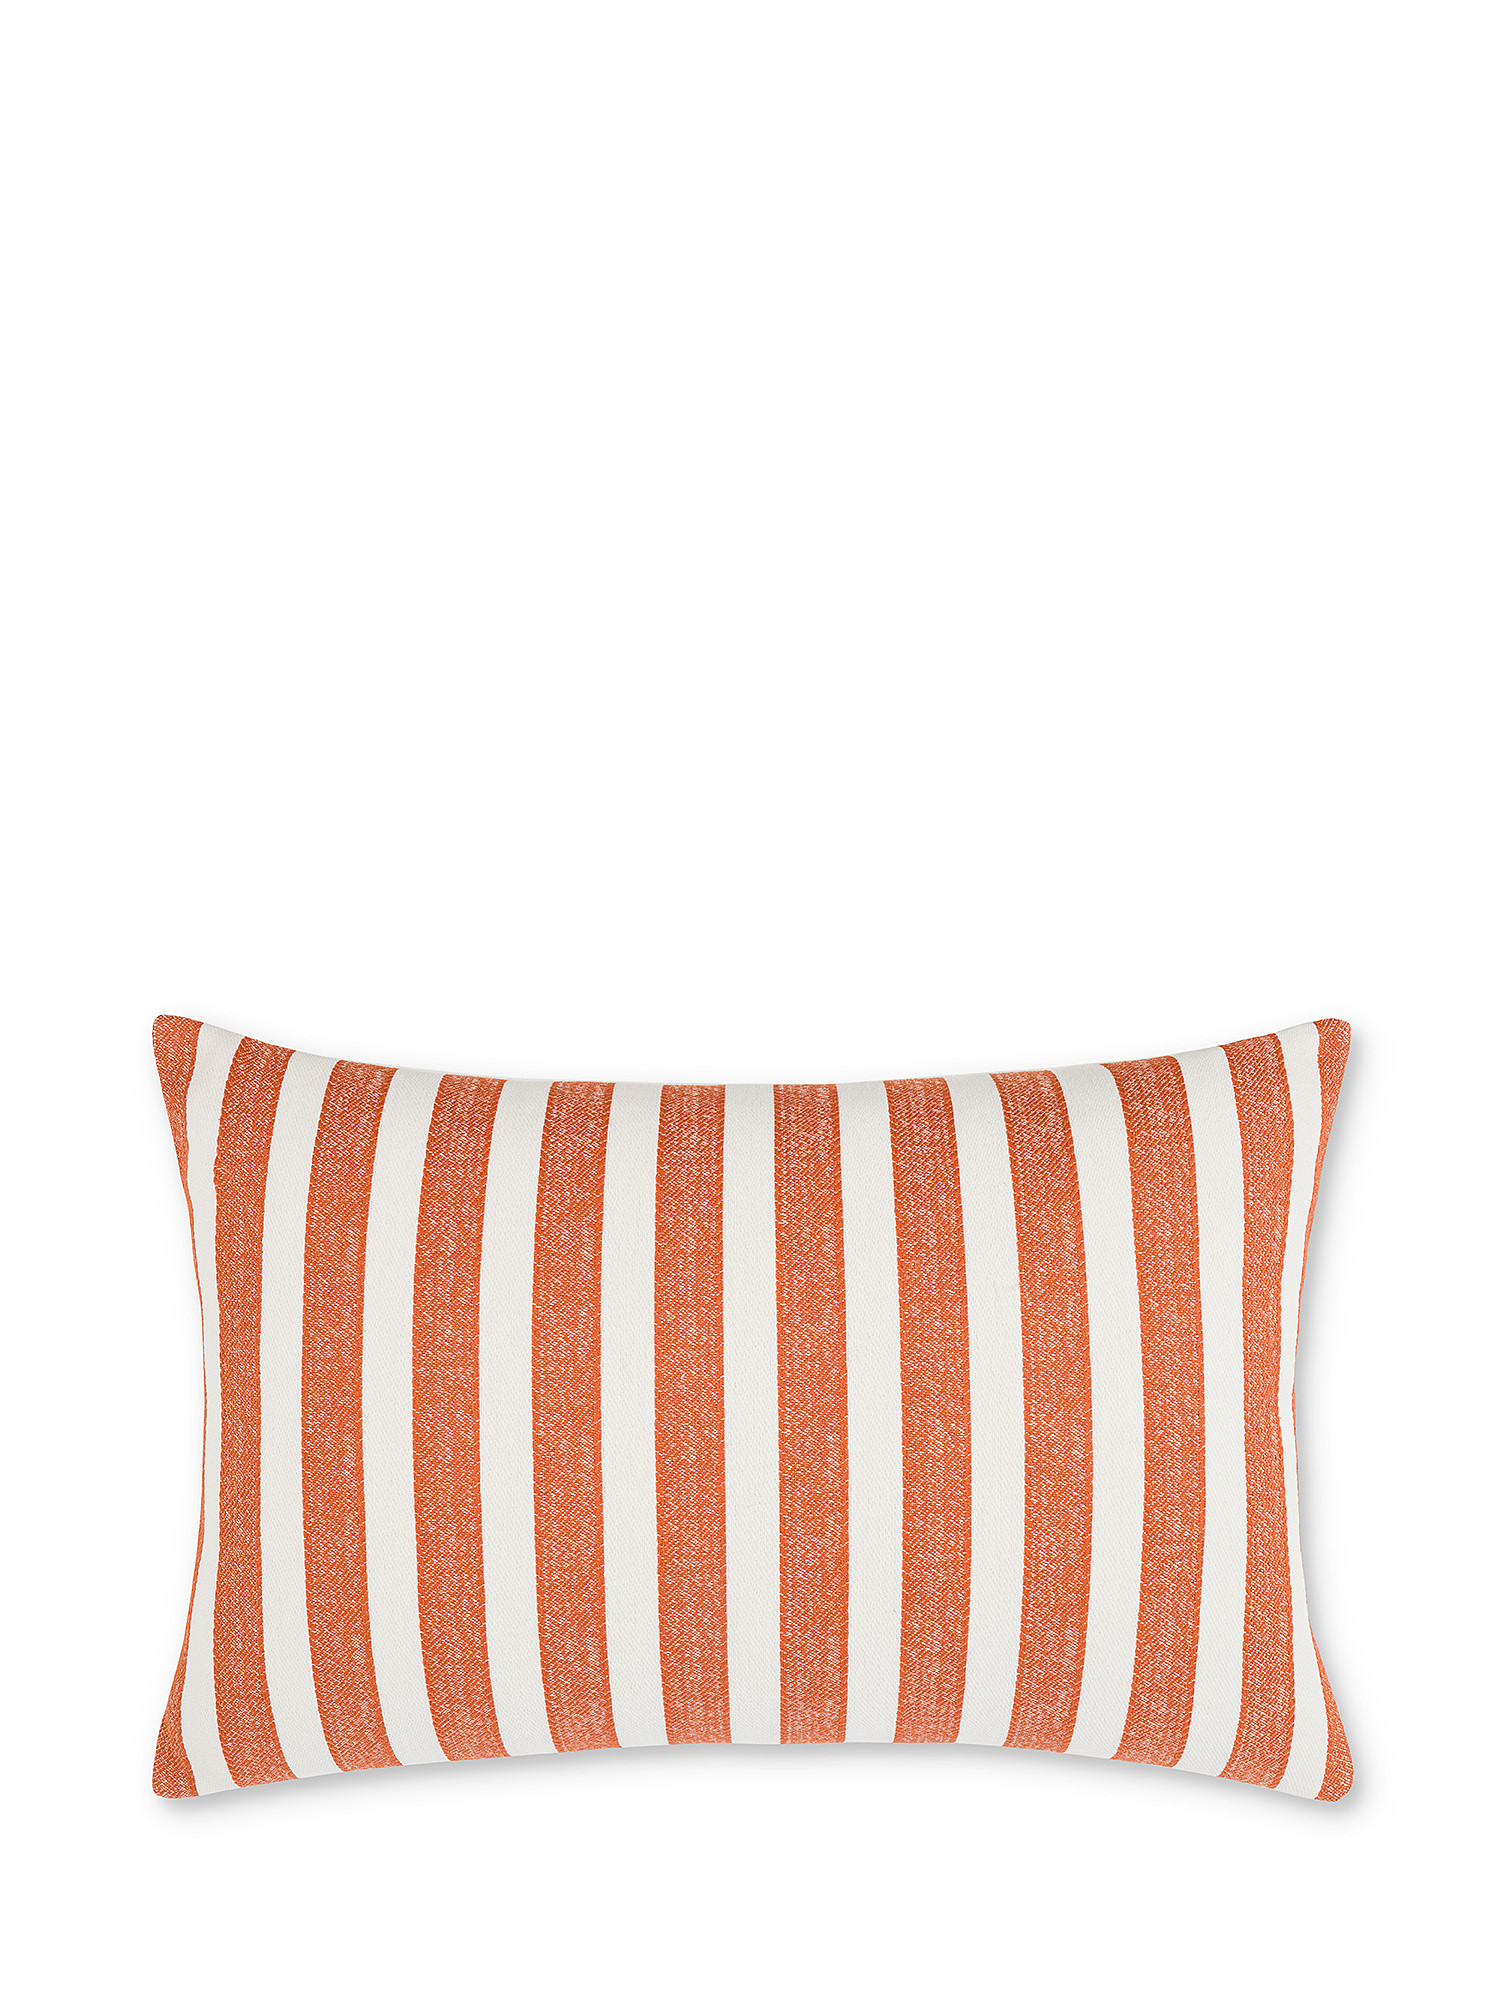 Striped jacquard fabric cushion 35x55cm, Pink, large image number 0